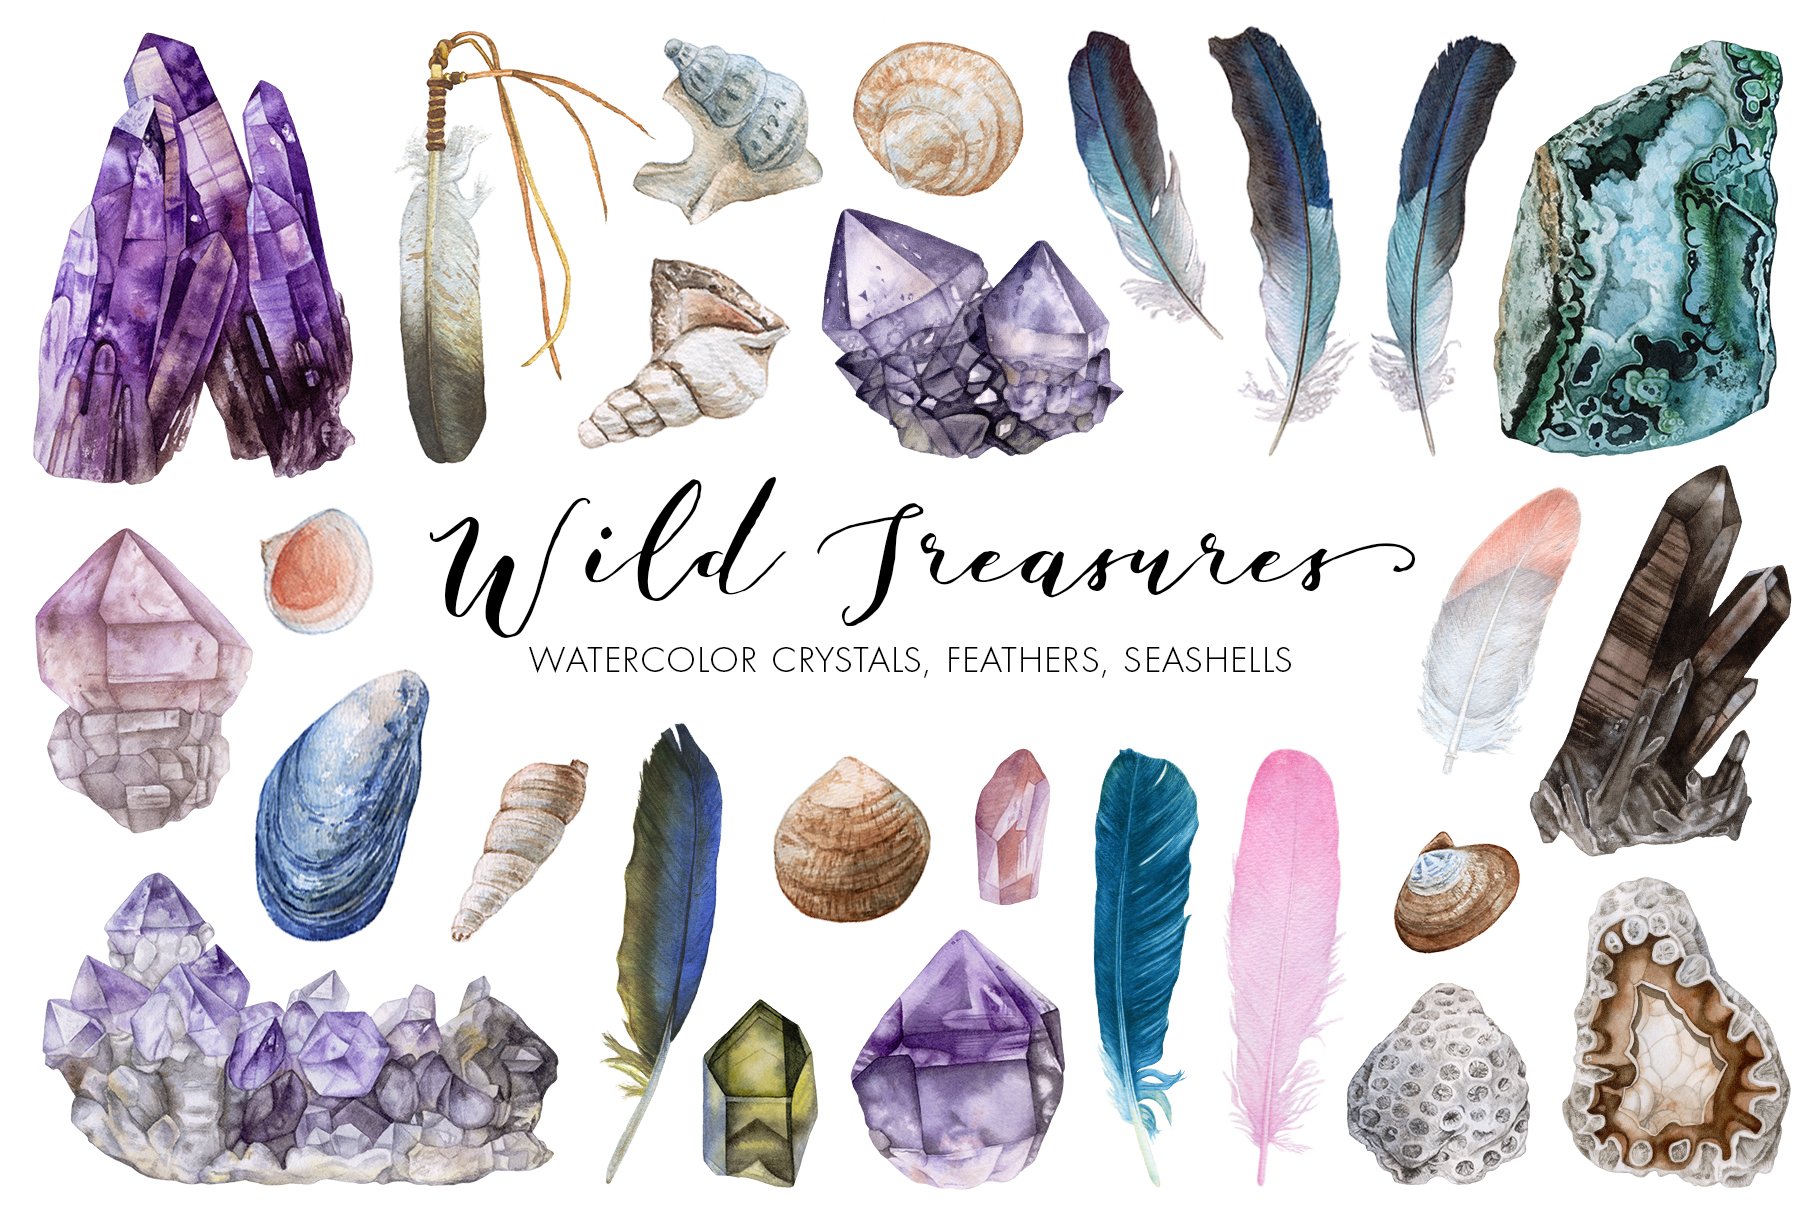 Wild Treasures cover image.